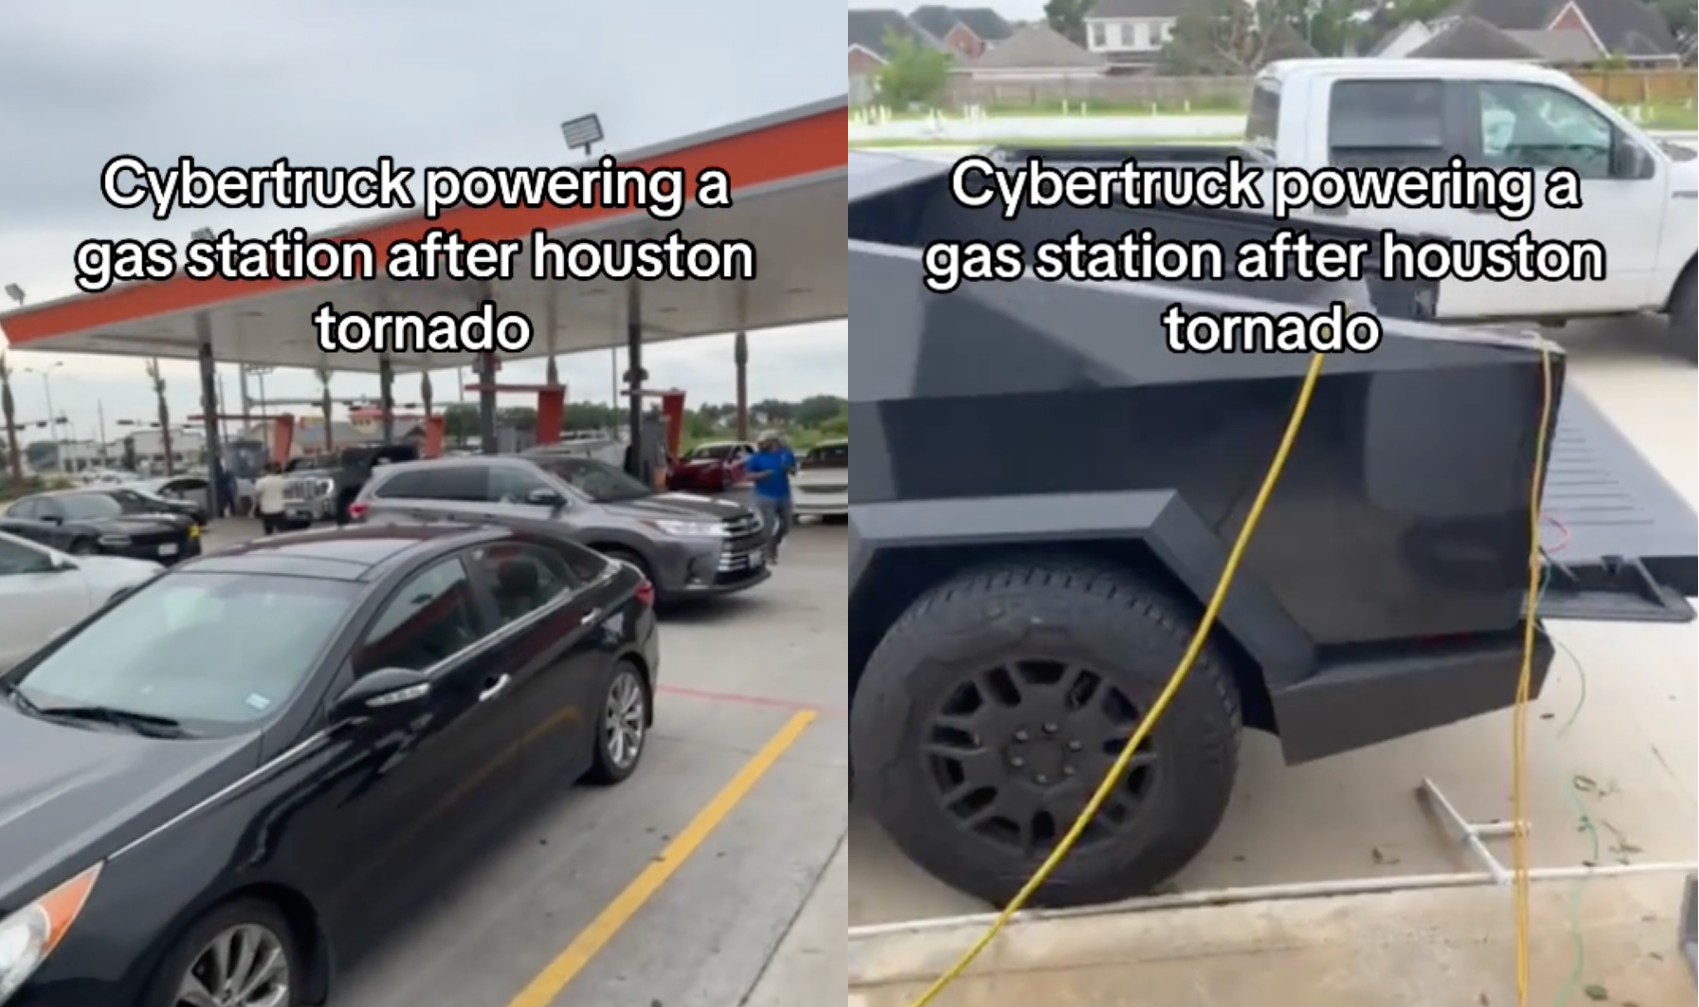 Tesla Cybertruck seemingly helps power gas station after Houston tornado